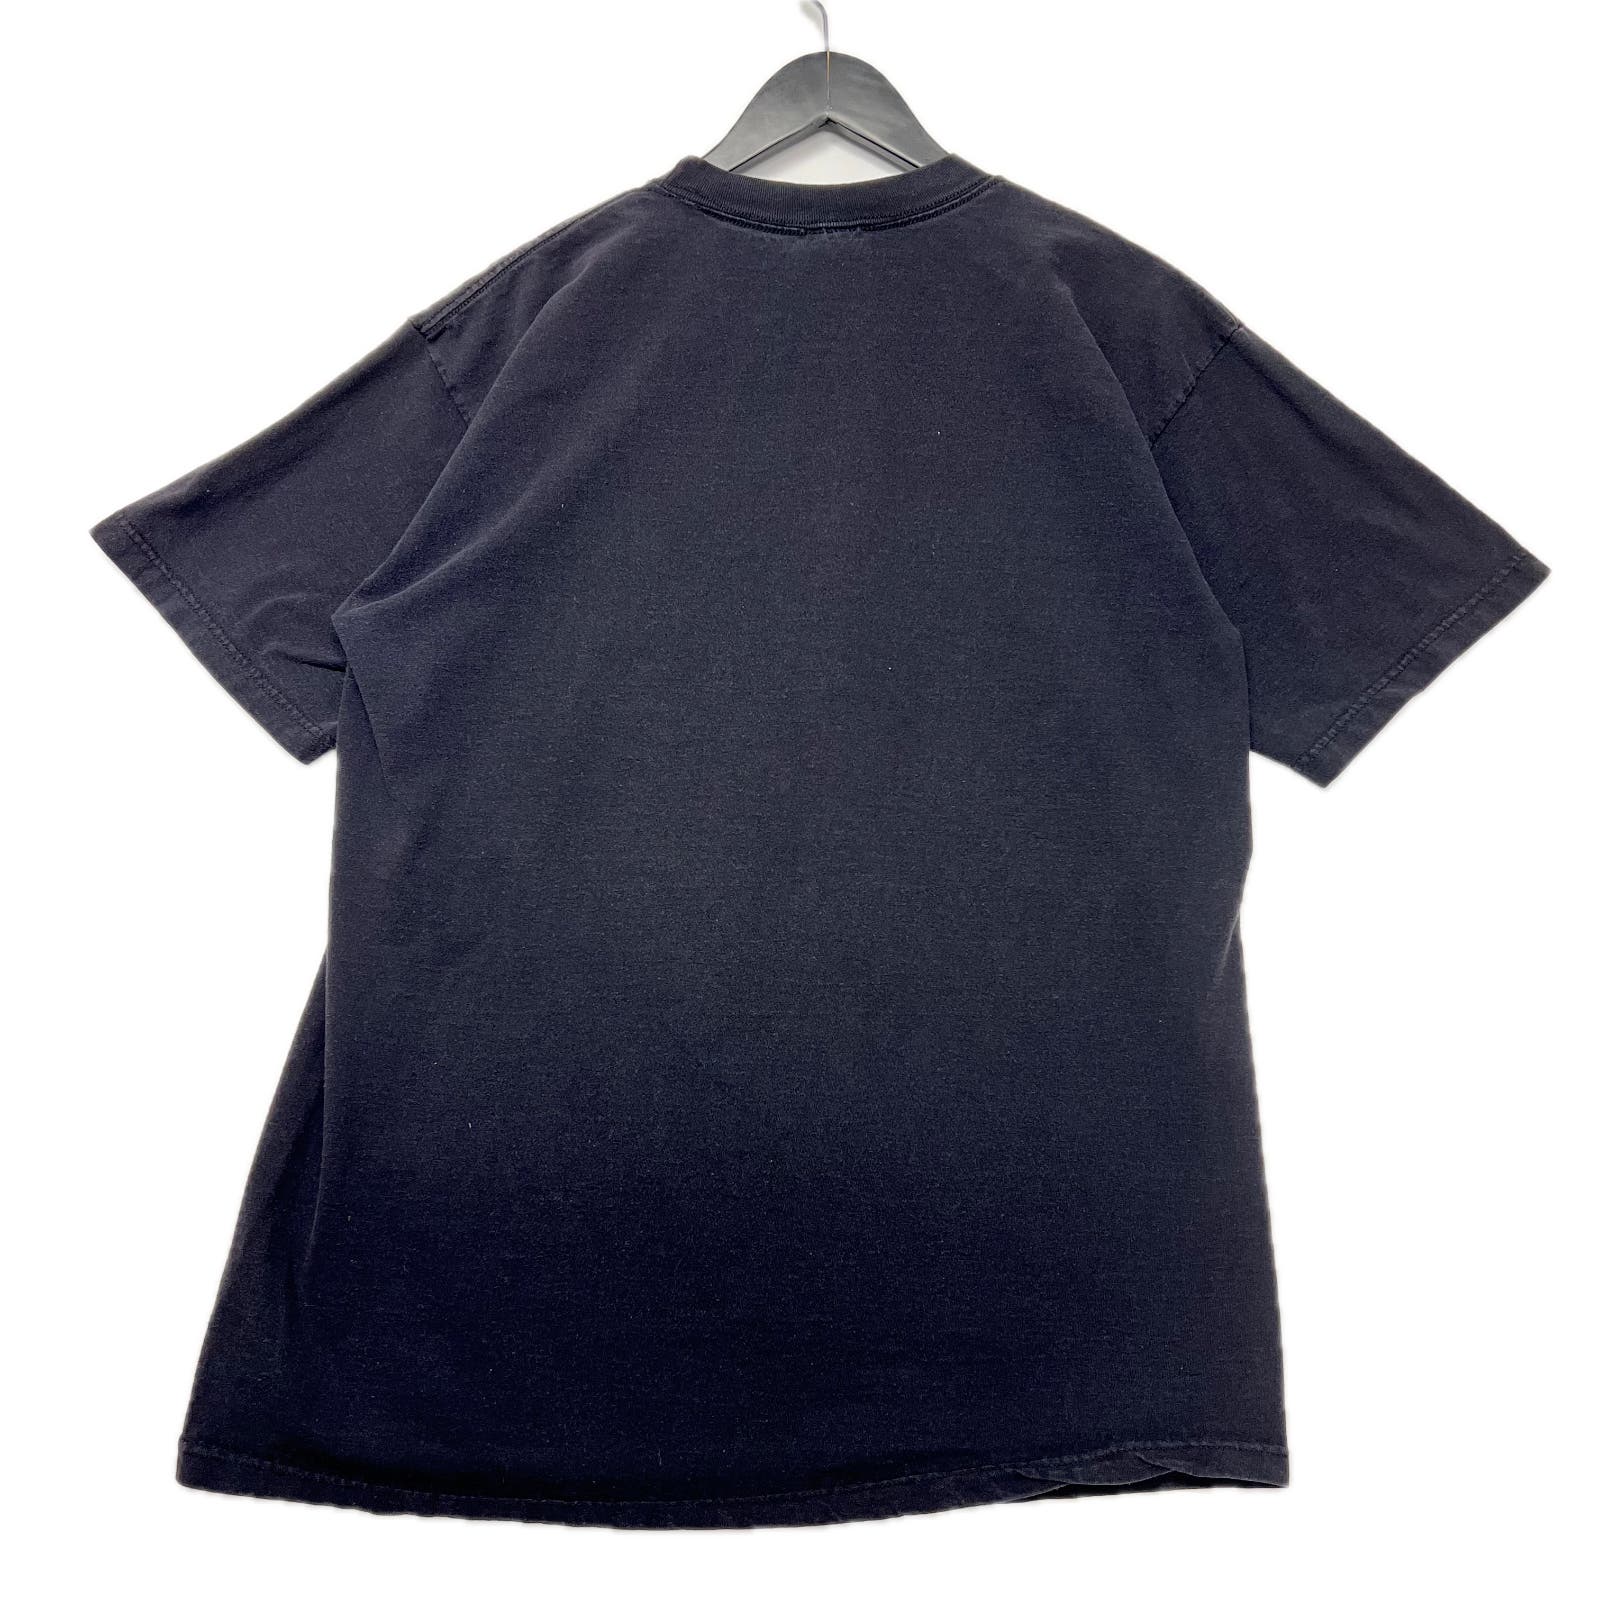 Vintage 1998 NFL Miami Dolphins Riddell Black T-Shirt Size XL Locker Room